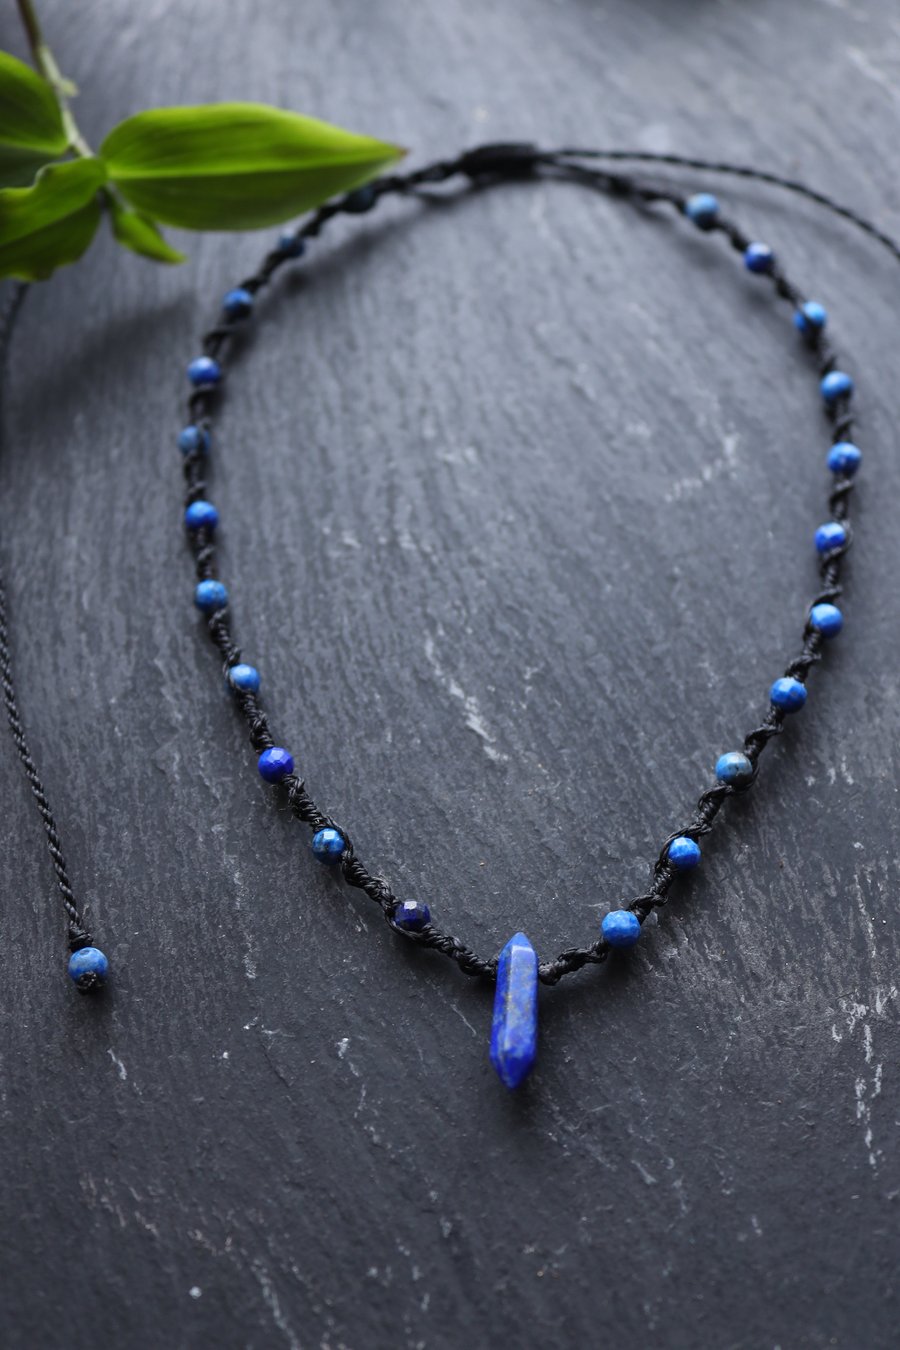 Women's adjustable choker necklace with Lapis lazuli